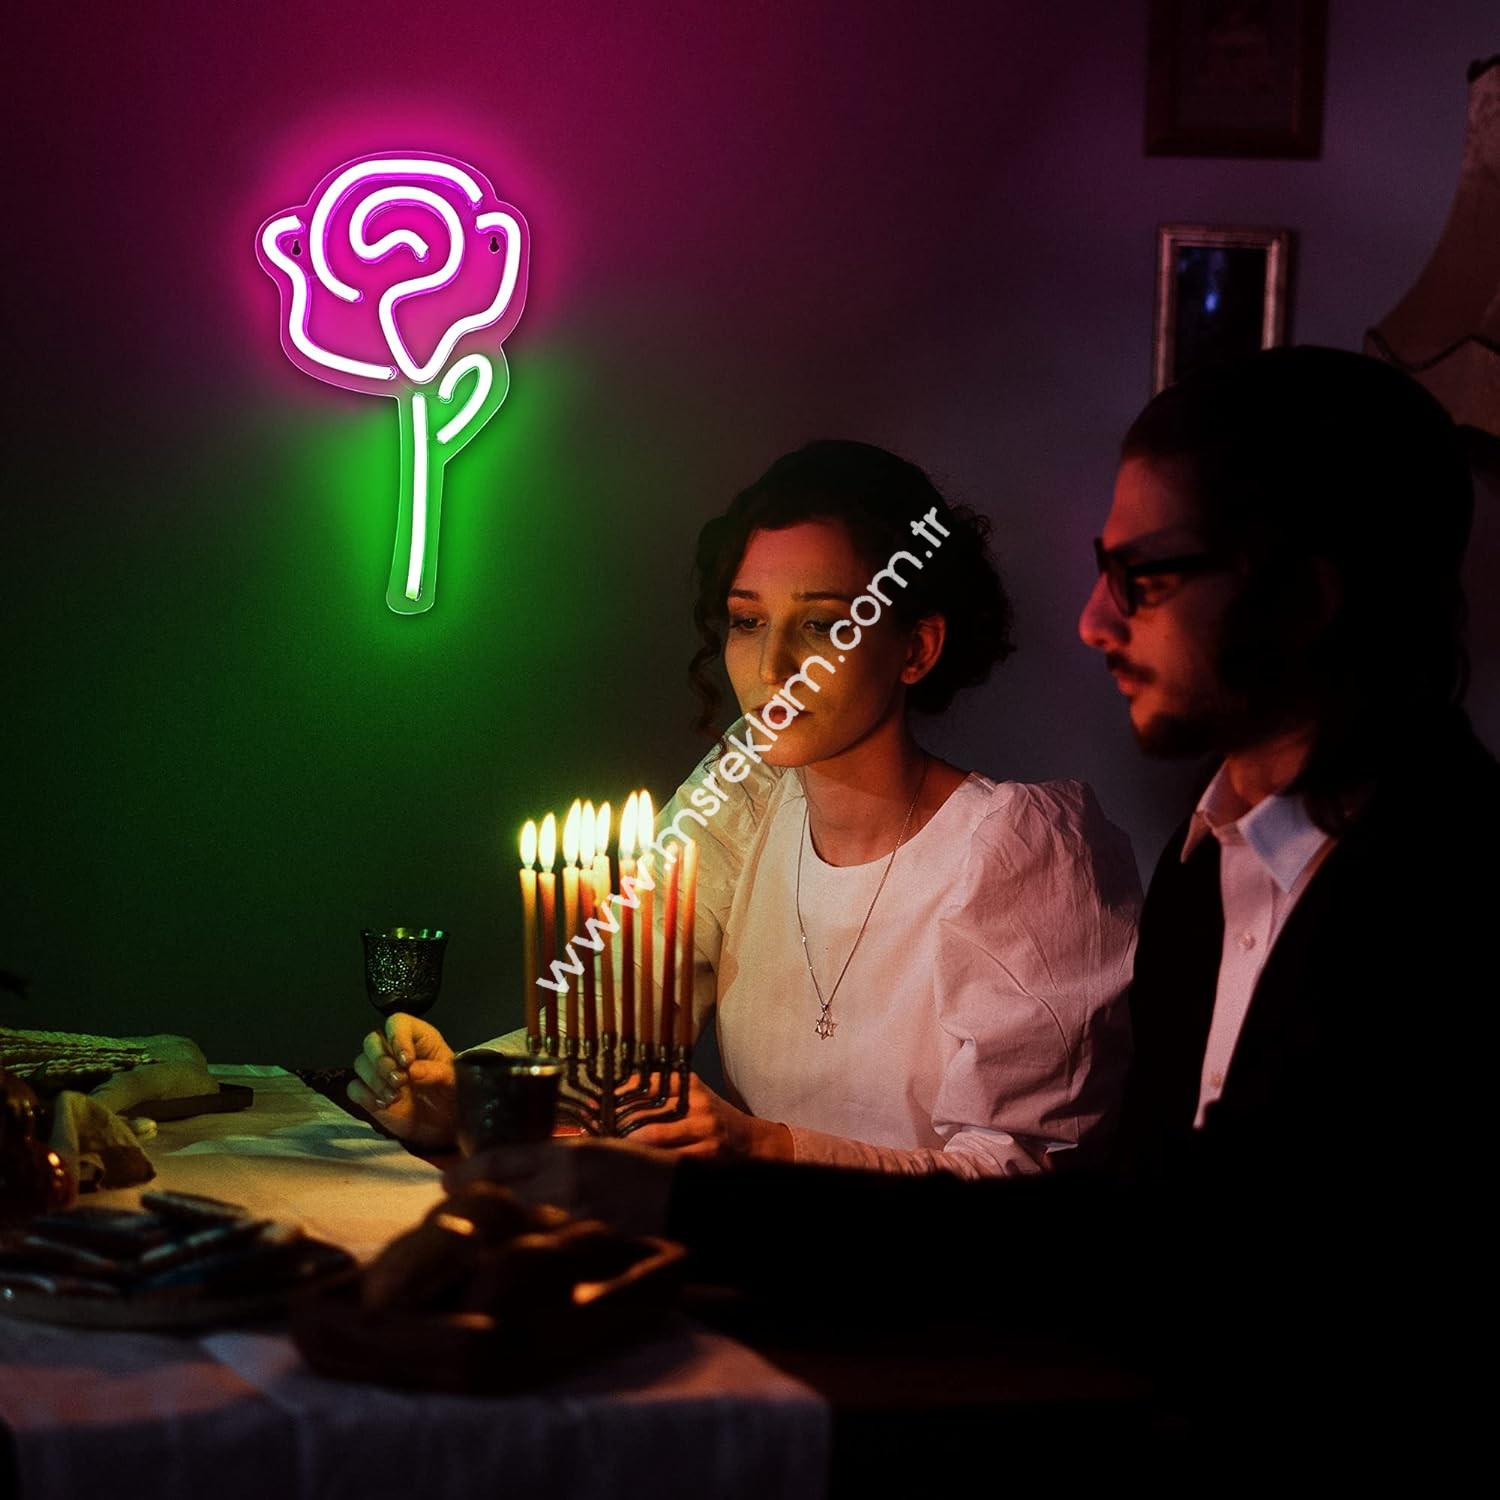 Gül (Rose) Neon Led Tabela